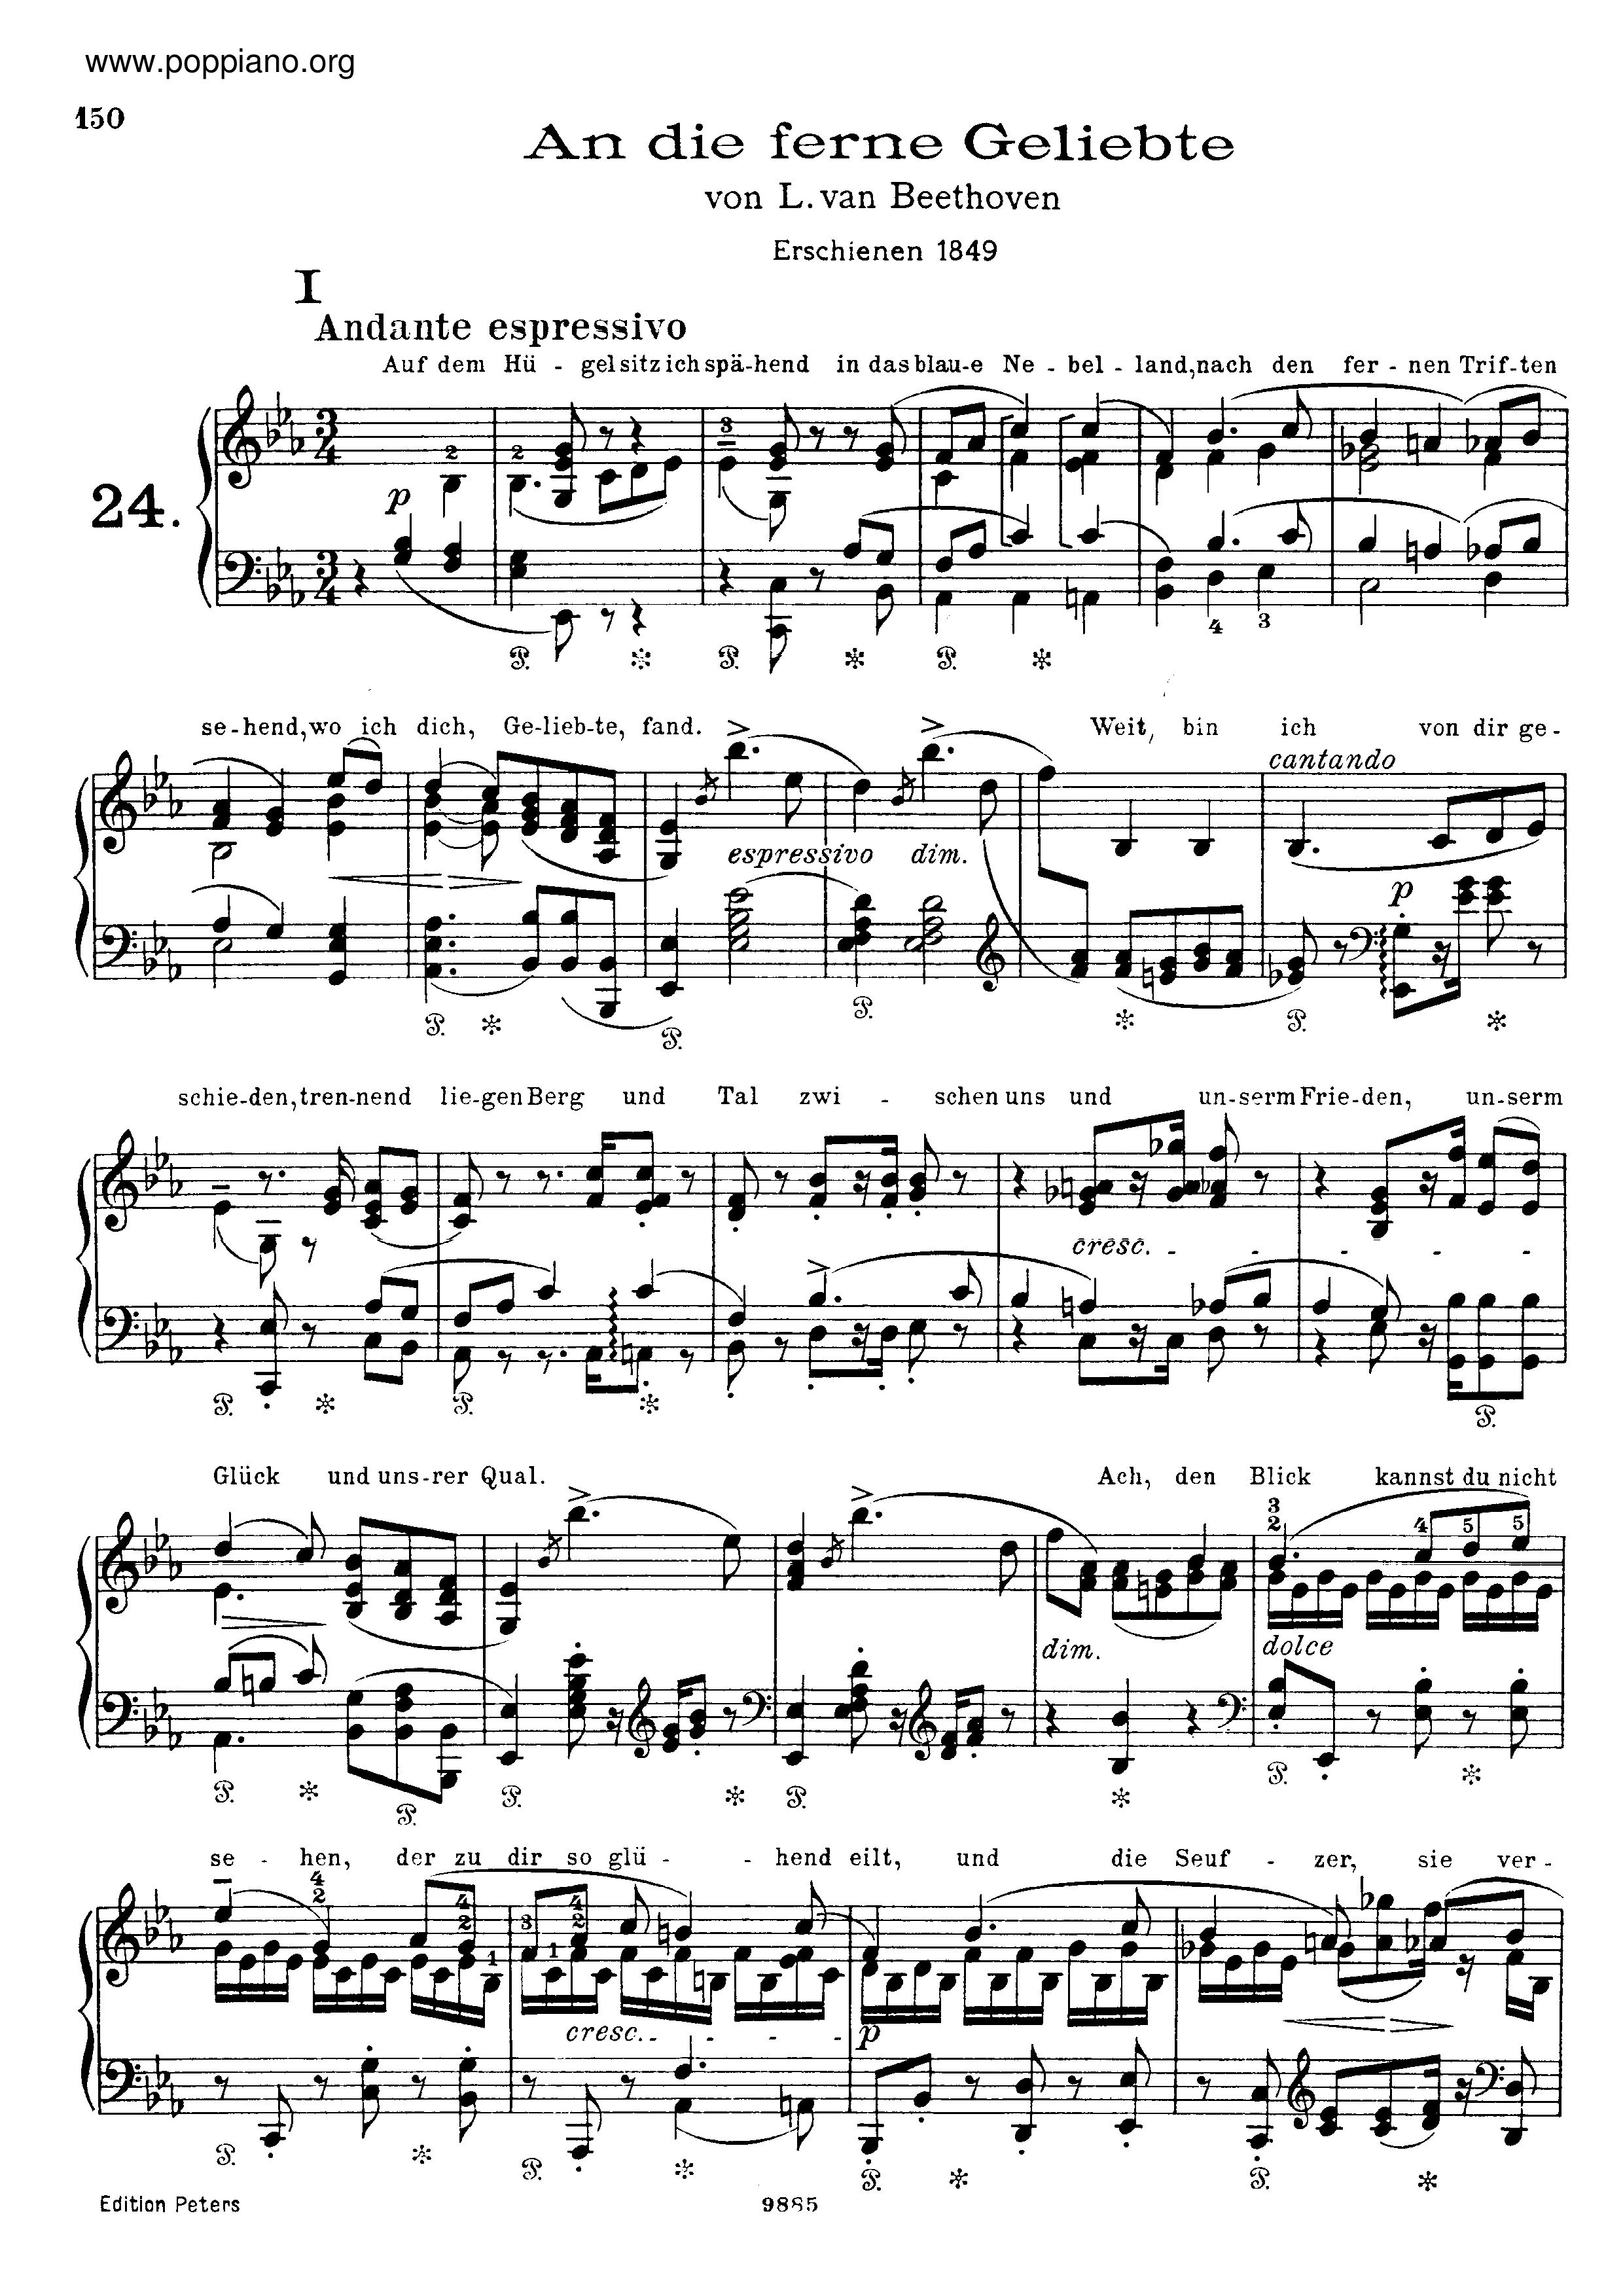 An die ferne Geliebte, by Beethoven, S.469 Score